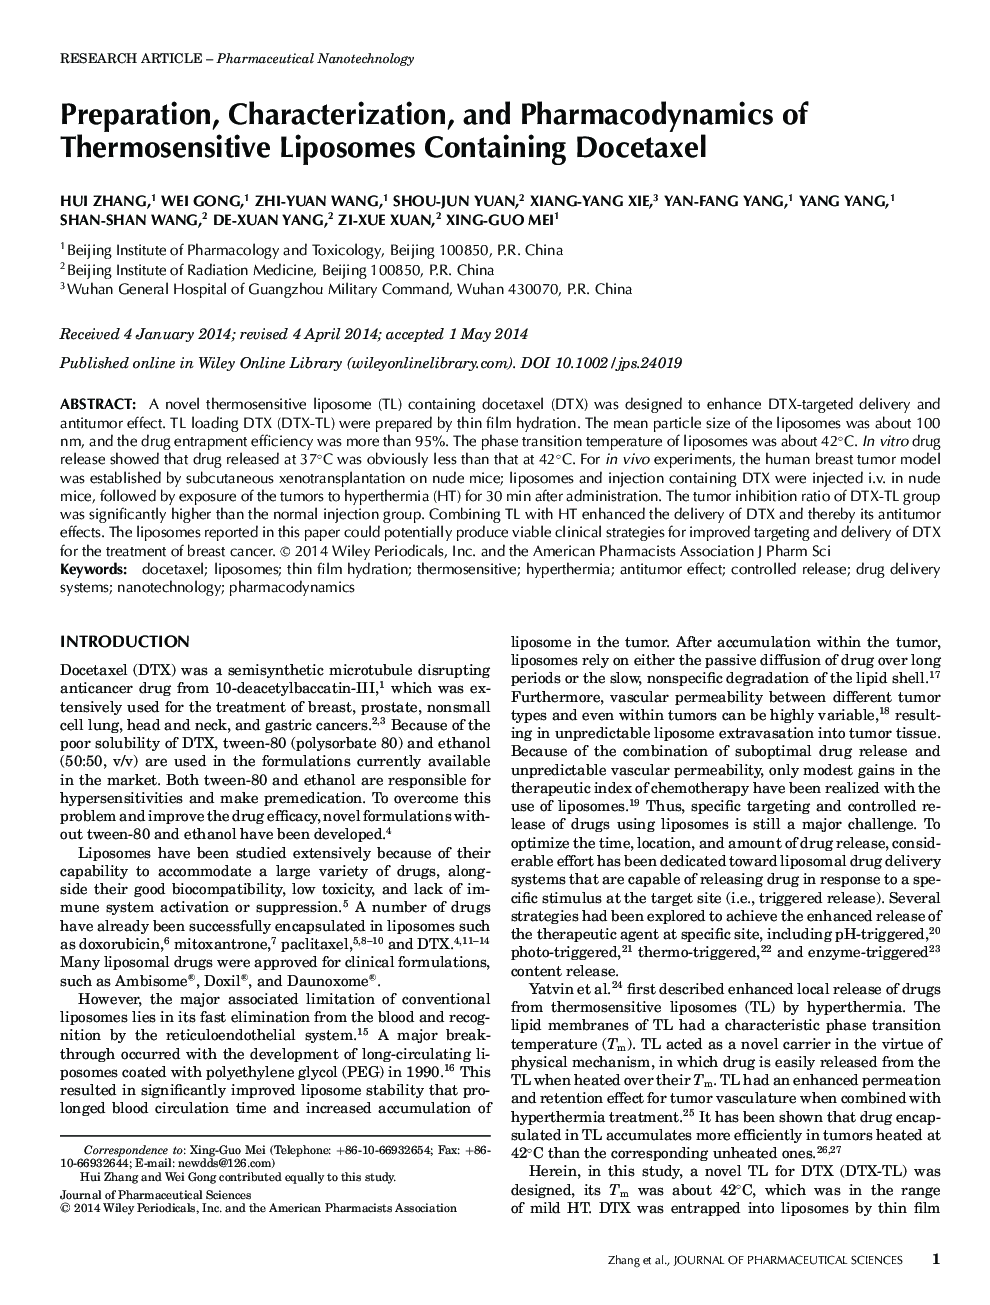 Preparation, Characterization, and Pharmacodynamics of Thermosensitive Liposomes Containing Docetaxel